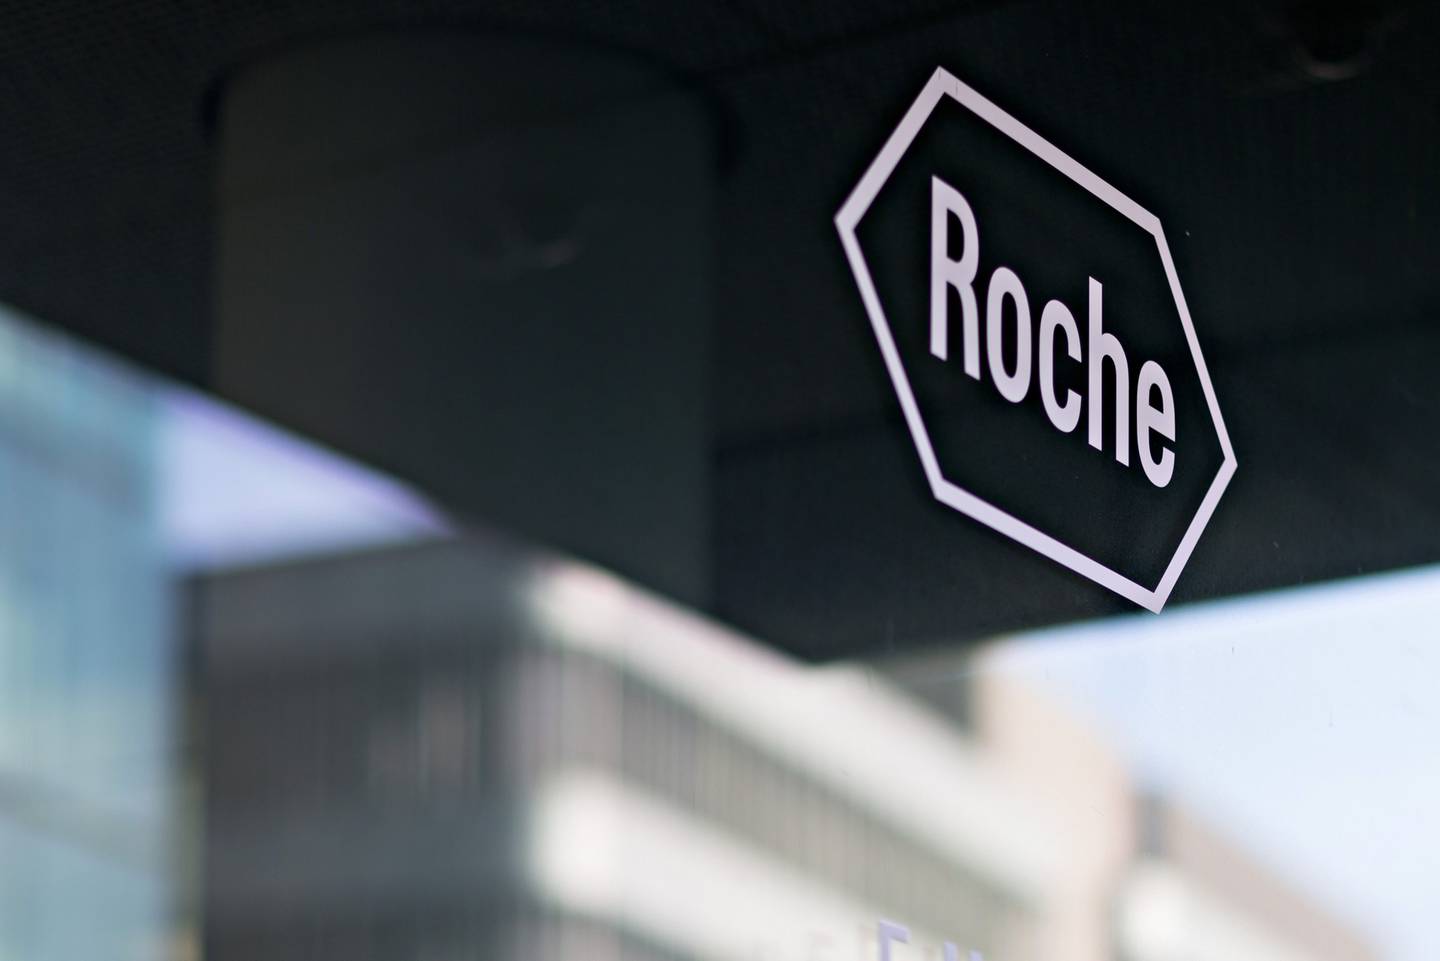 Receita da Roche tem sido impulsionada pelas vendas de testes de Covid-19